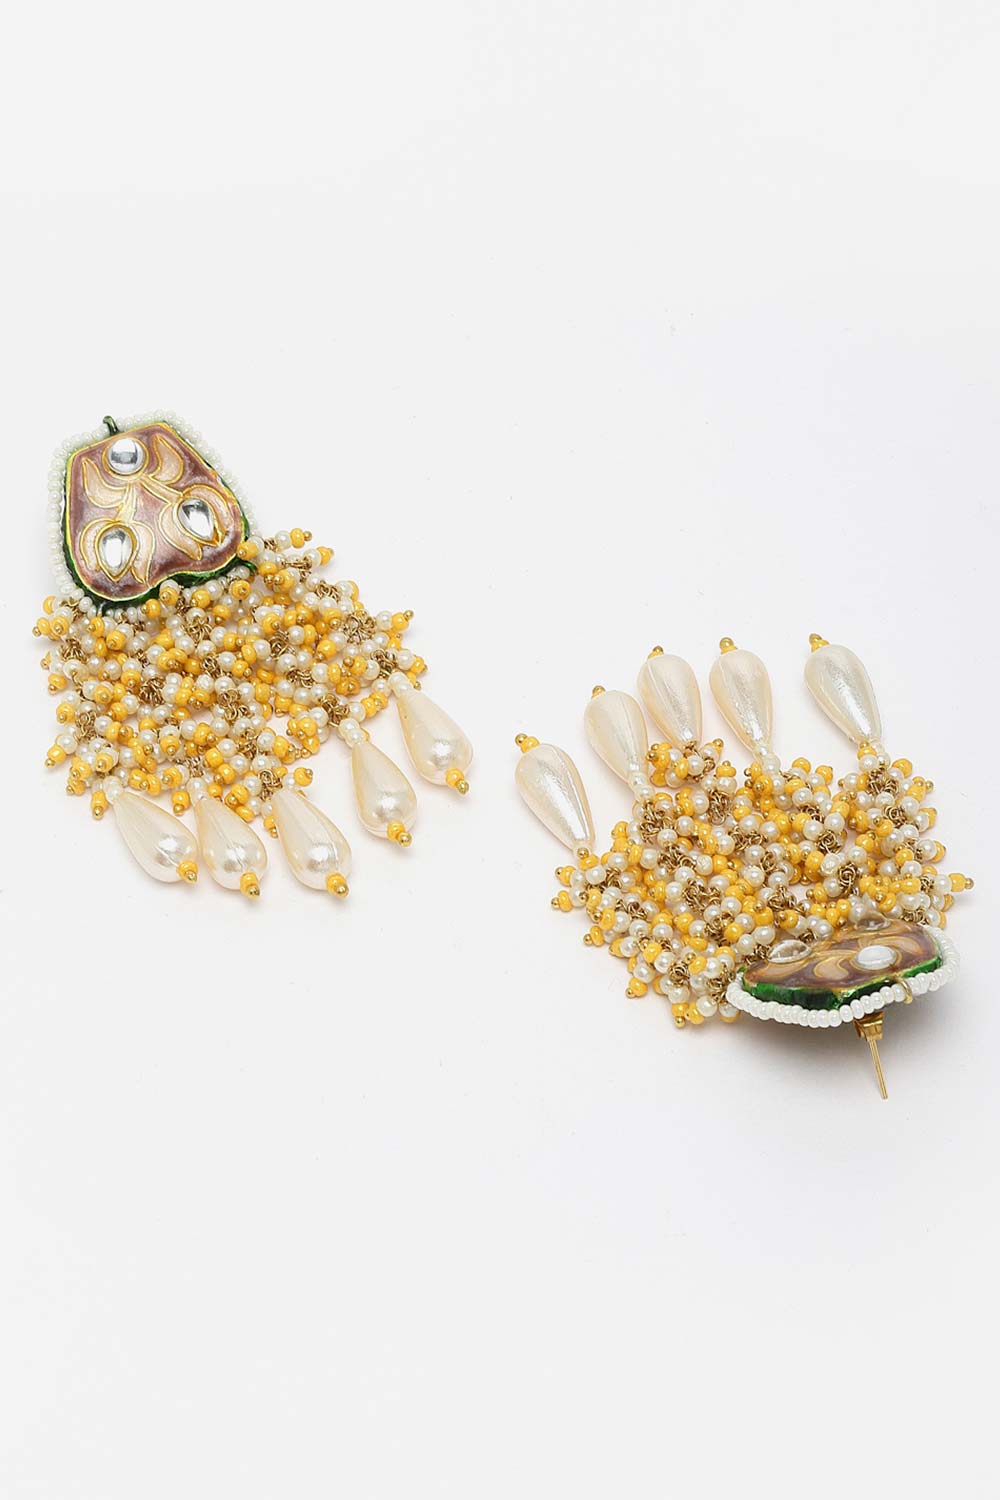 Savara Yellow & White Gold-Plated Kundan with Pearls Earrings